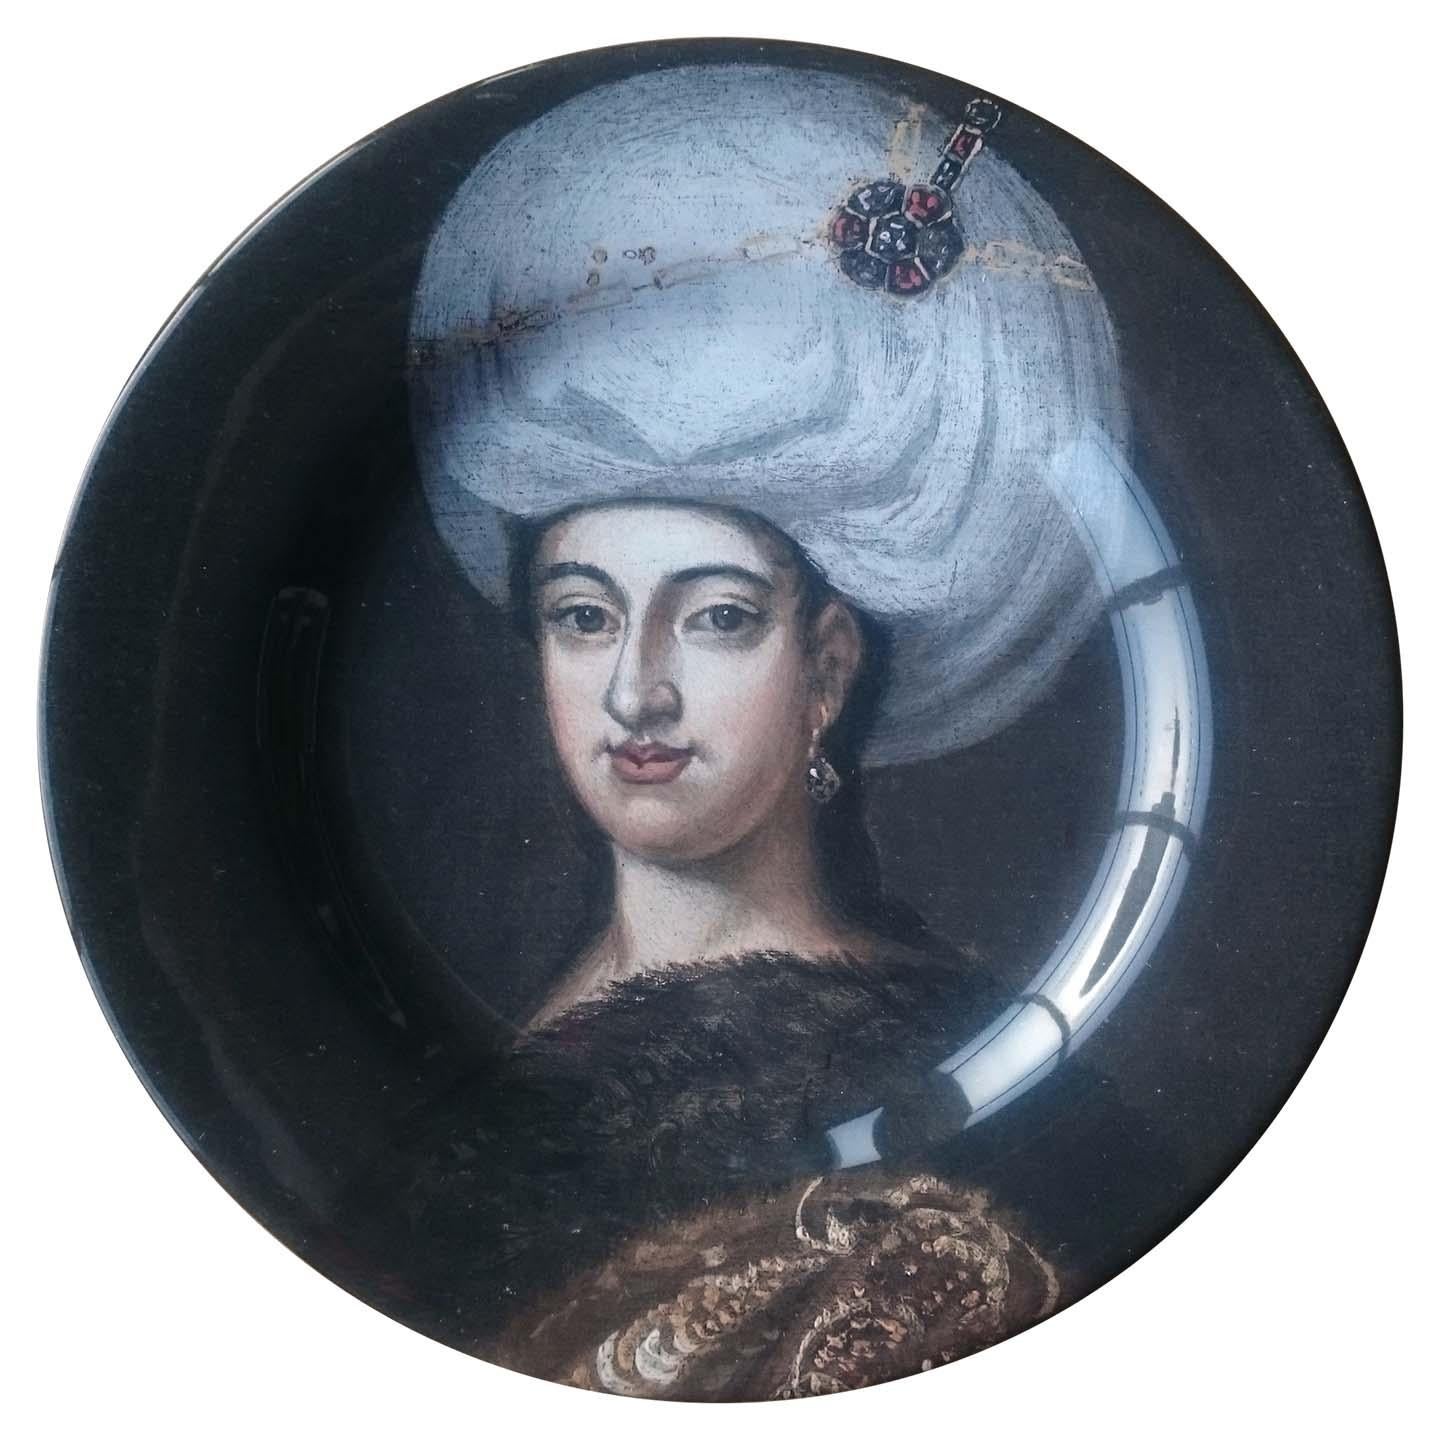 Handmade Ottoman Woman Portrait Ceramic Dinner Plate